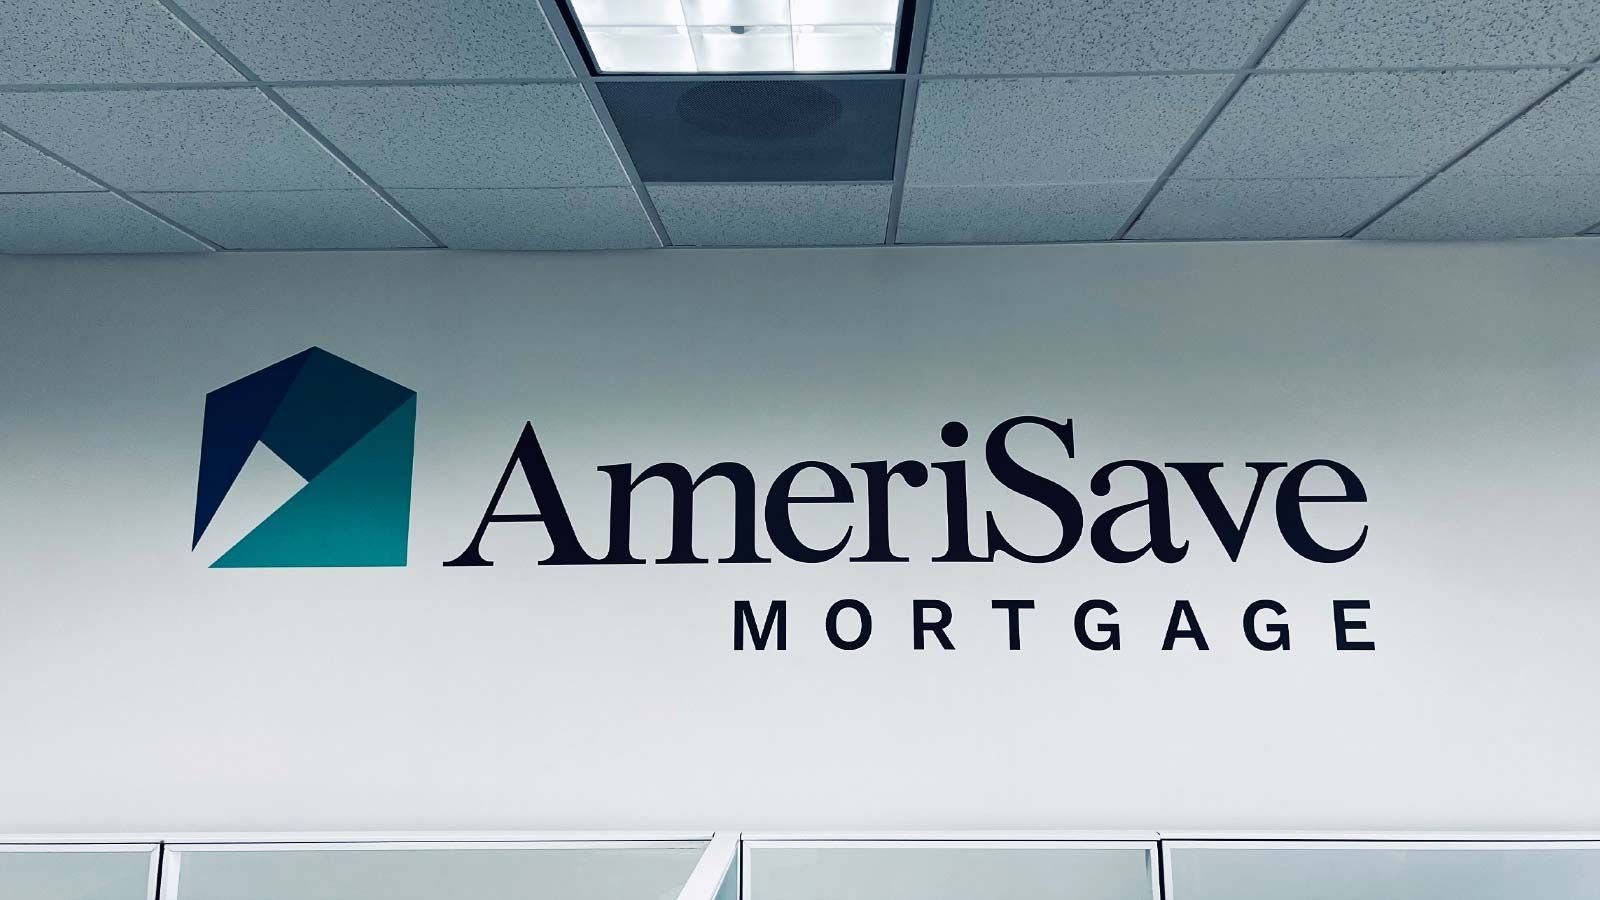 AmeriSave Mortgage vinyl lettering